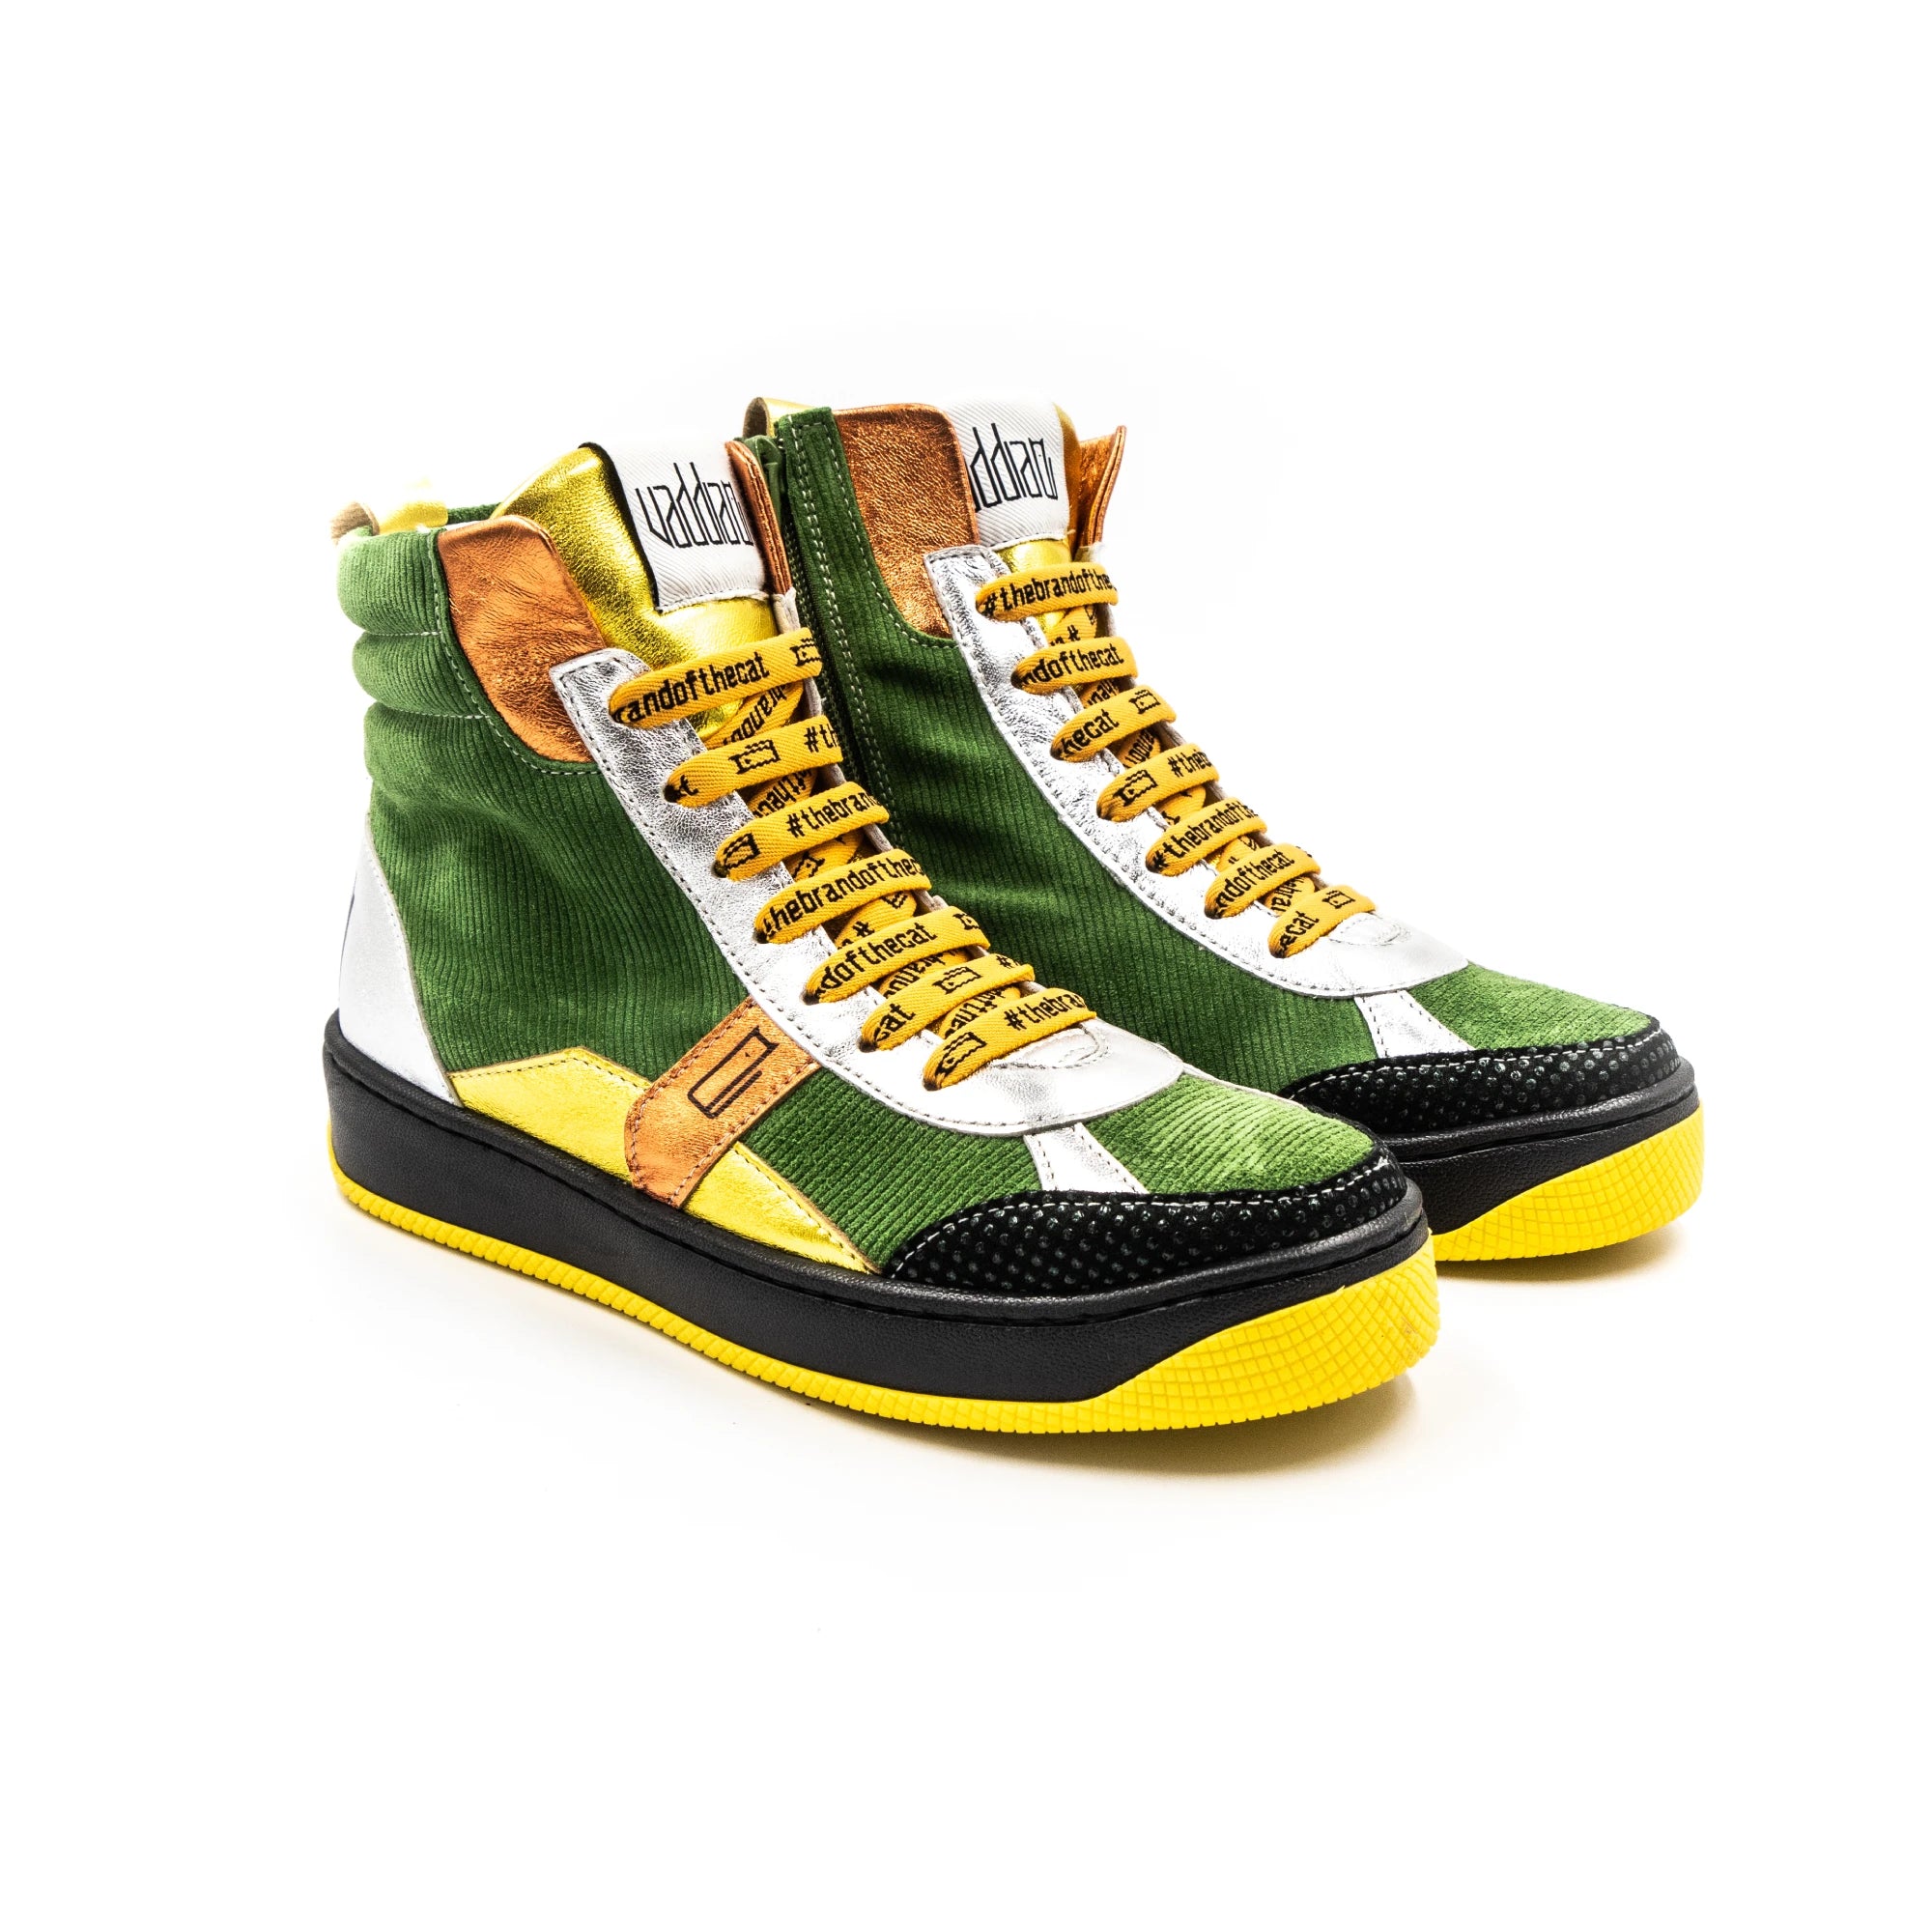 Green high-top sneakers.